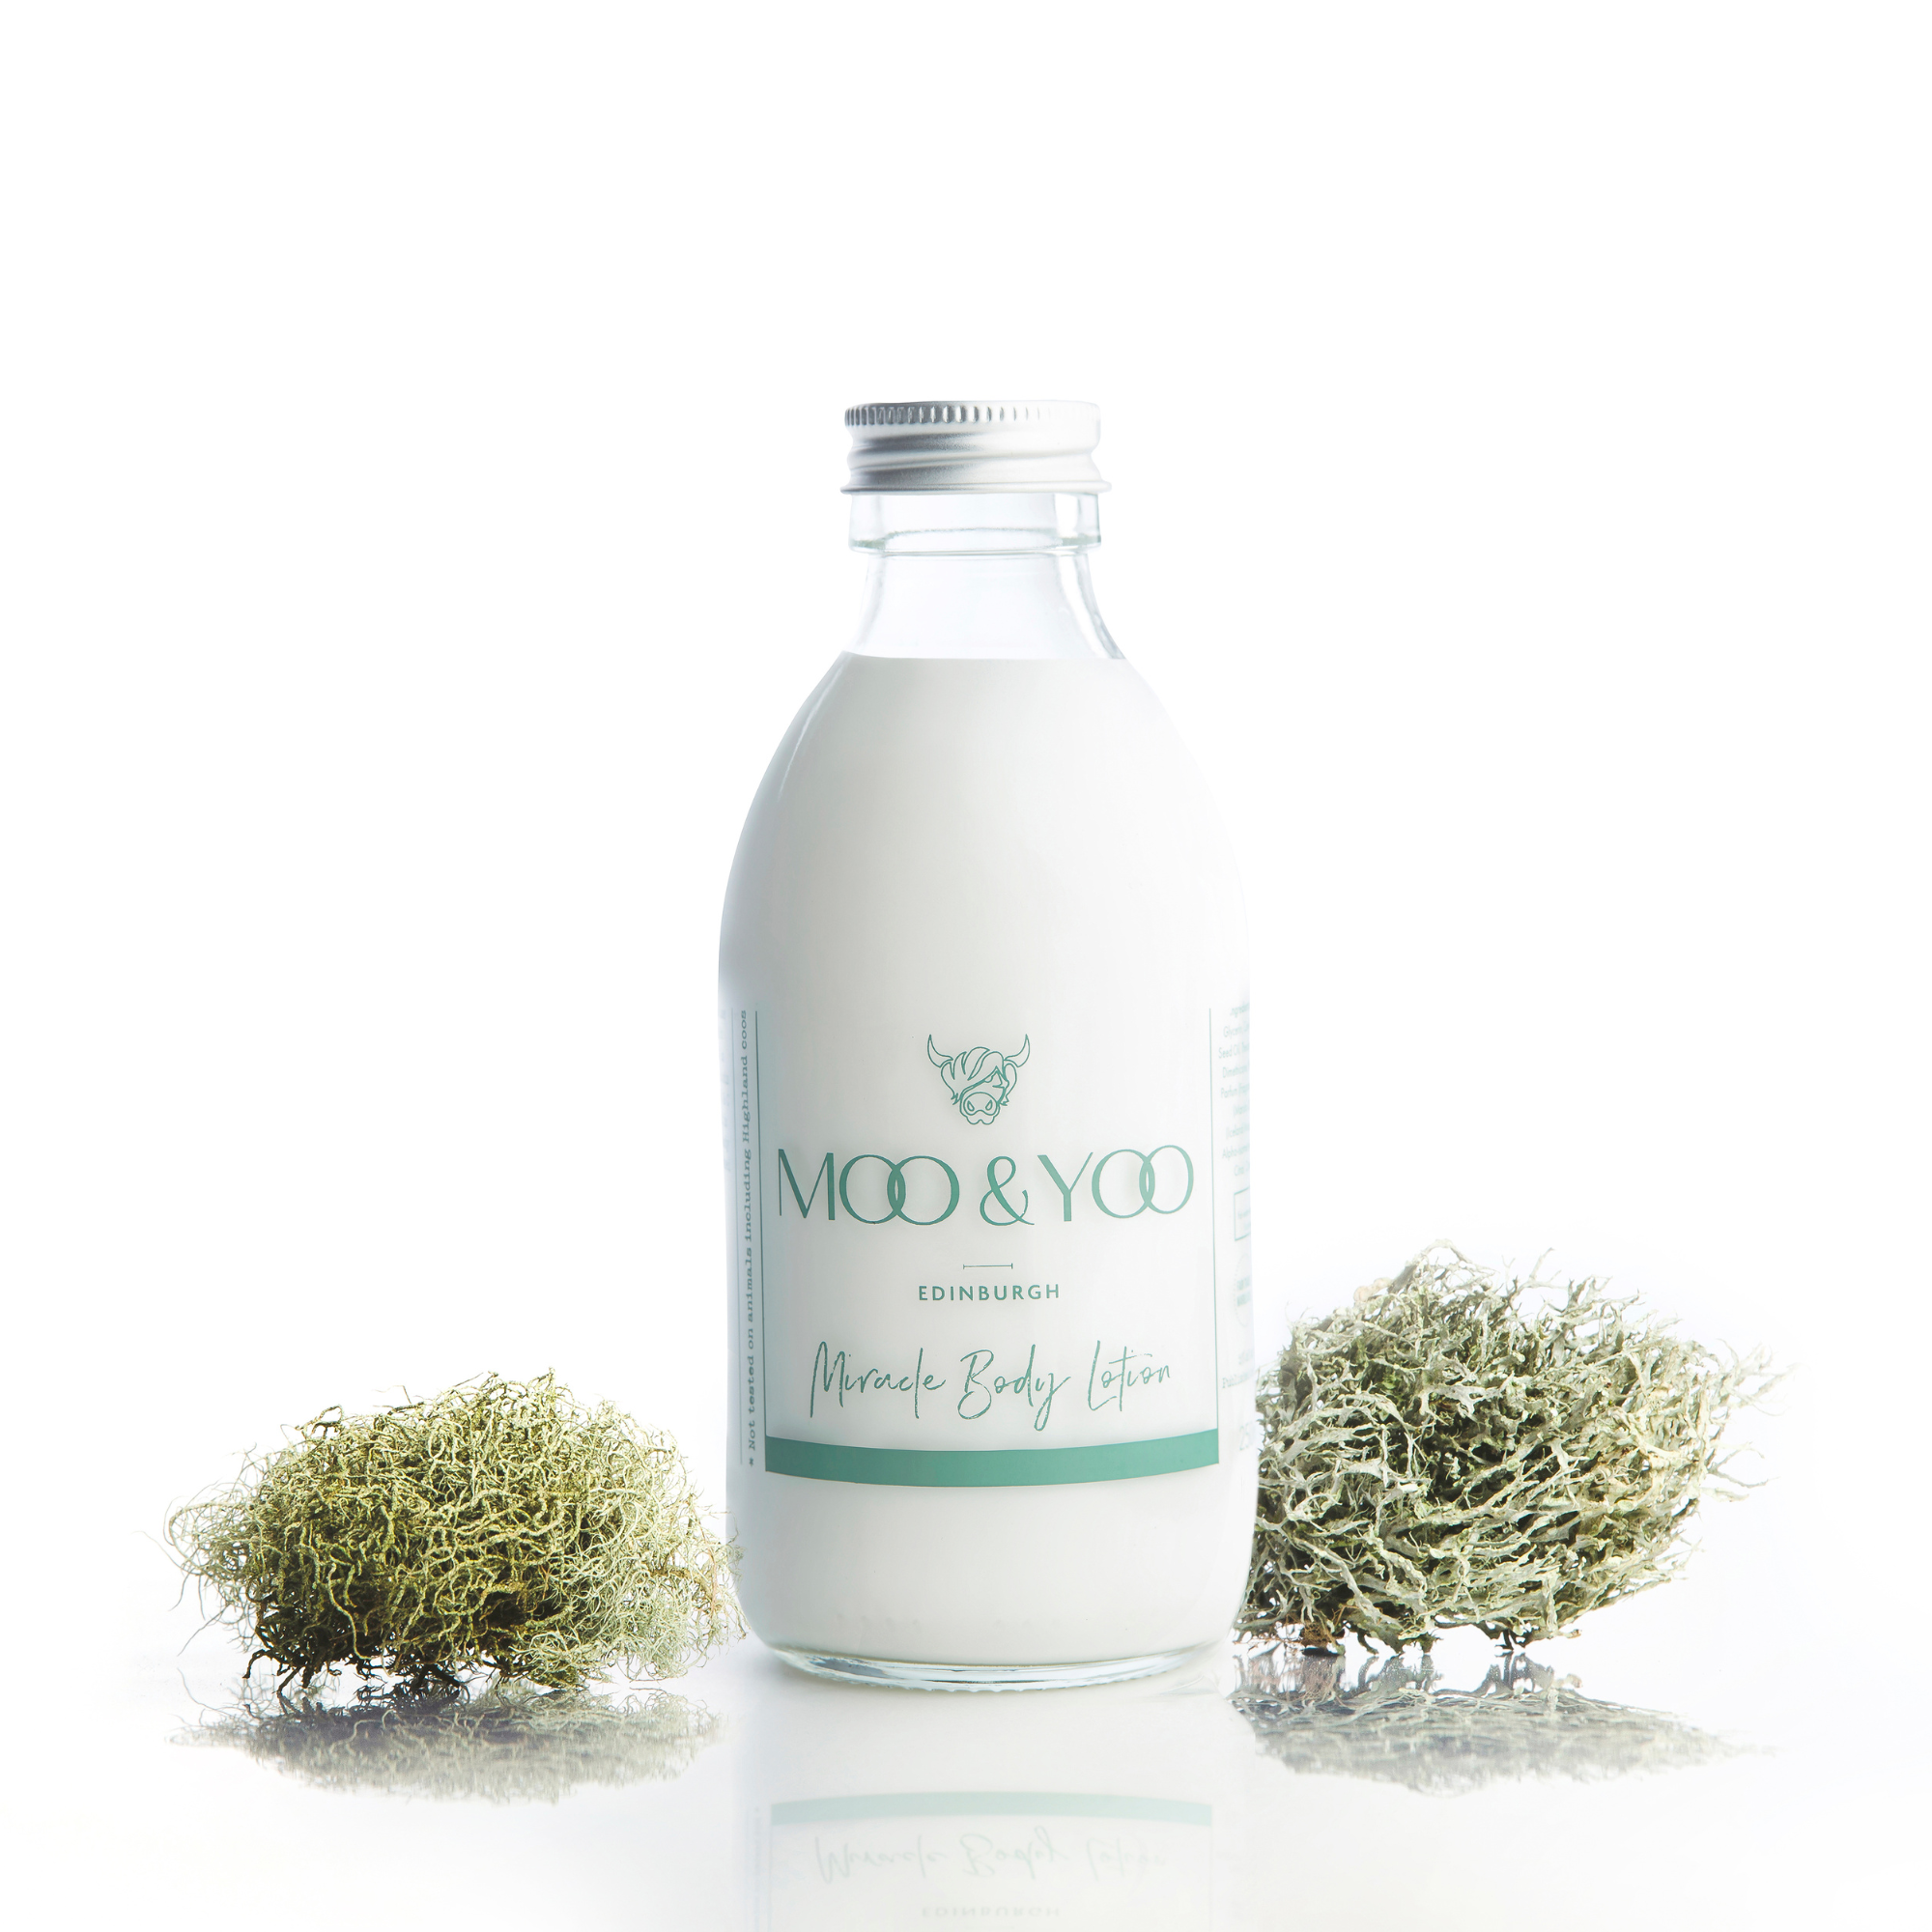 Luxury Nourishing Vegan Bodycare in Sustainable Glass Bottles